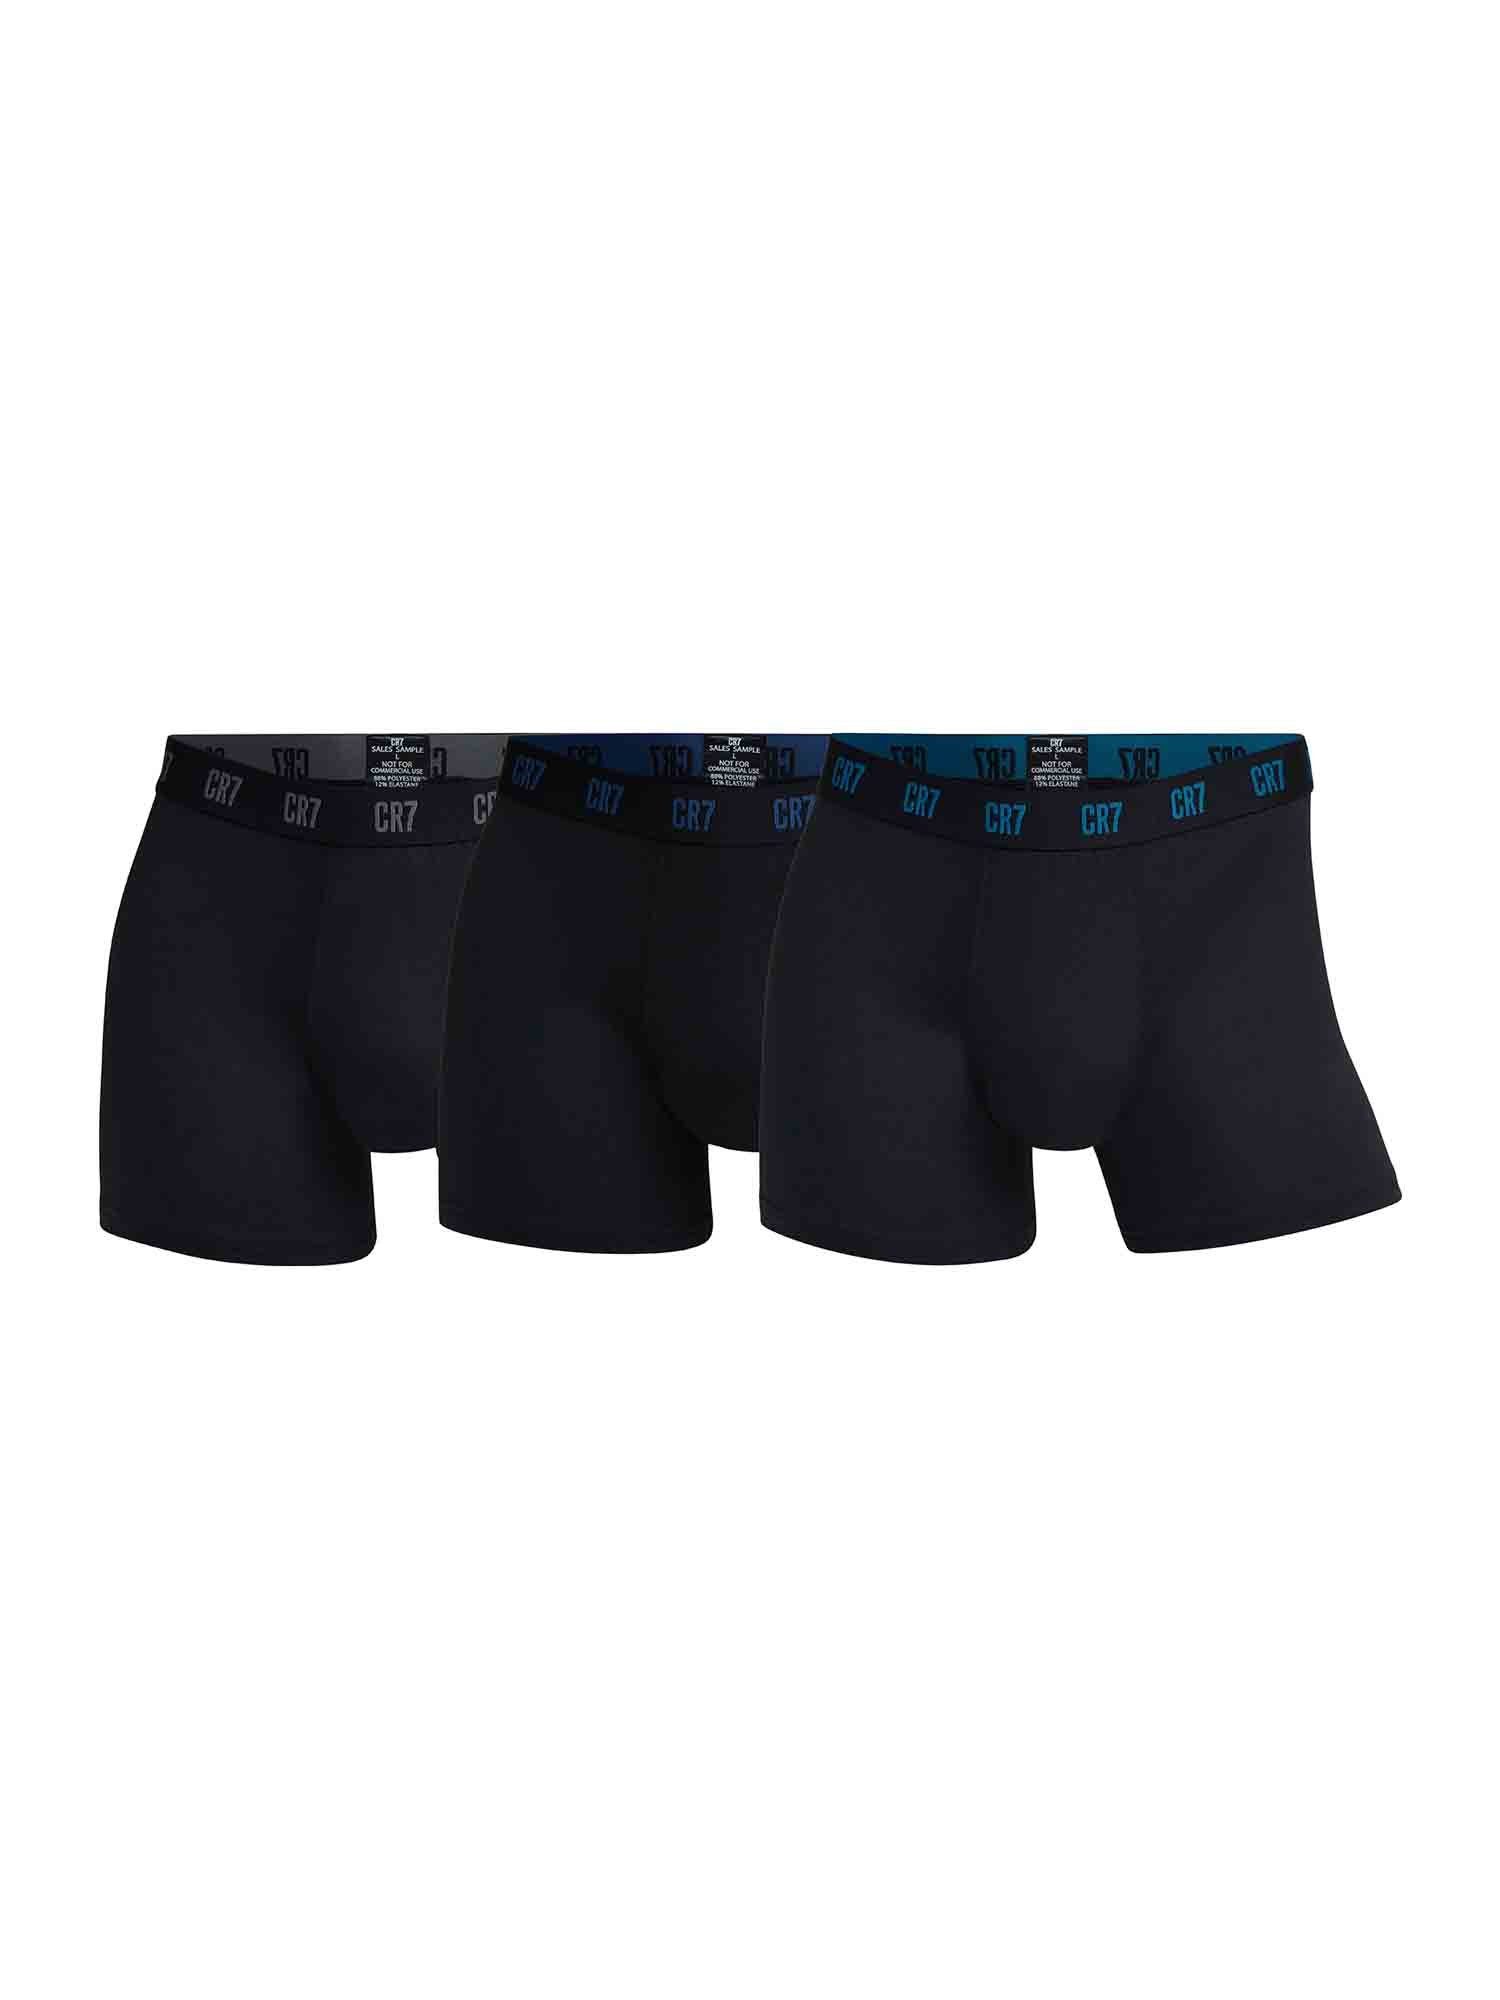 Retro Boxershorts Trunks Pants Pants CR7 Multi (3-St) Multipack Retro Herren Männer 18